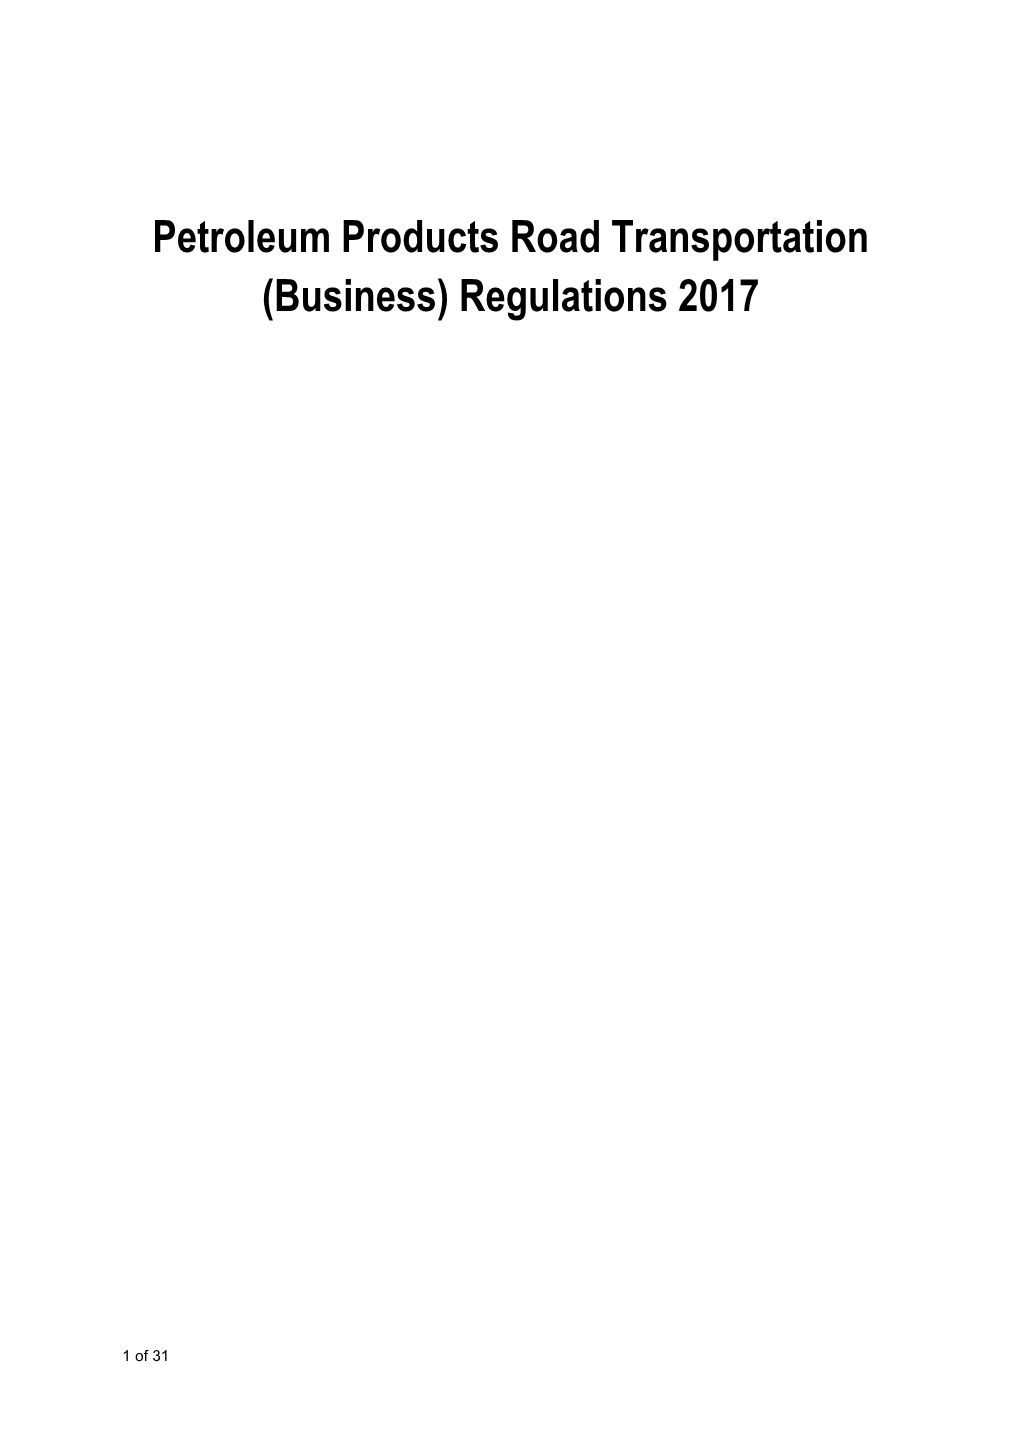 Petroleum Products Road Transportation (Business) Regulations 2017